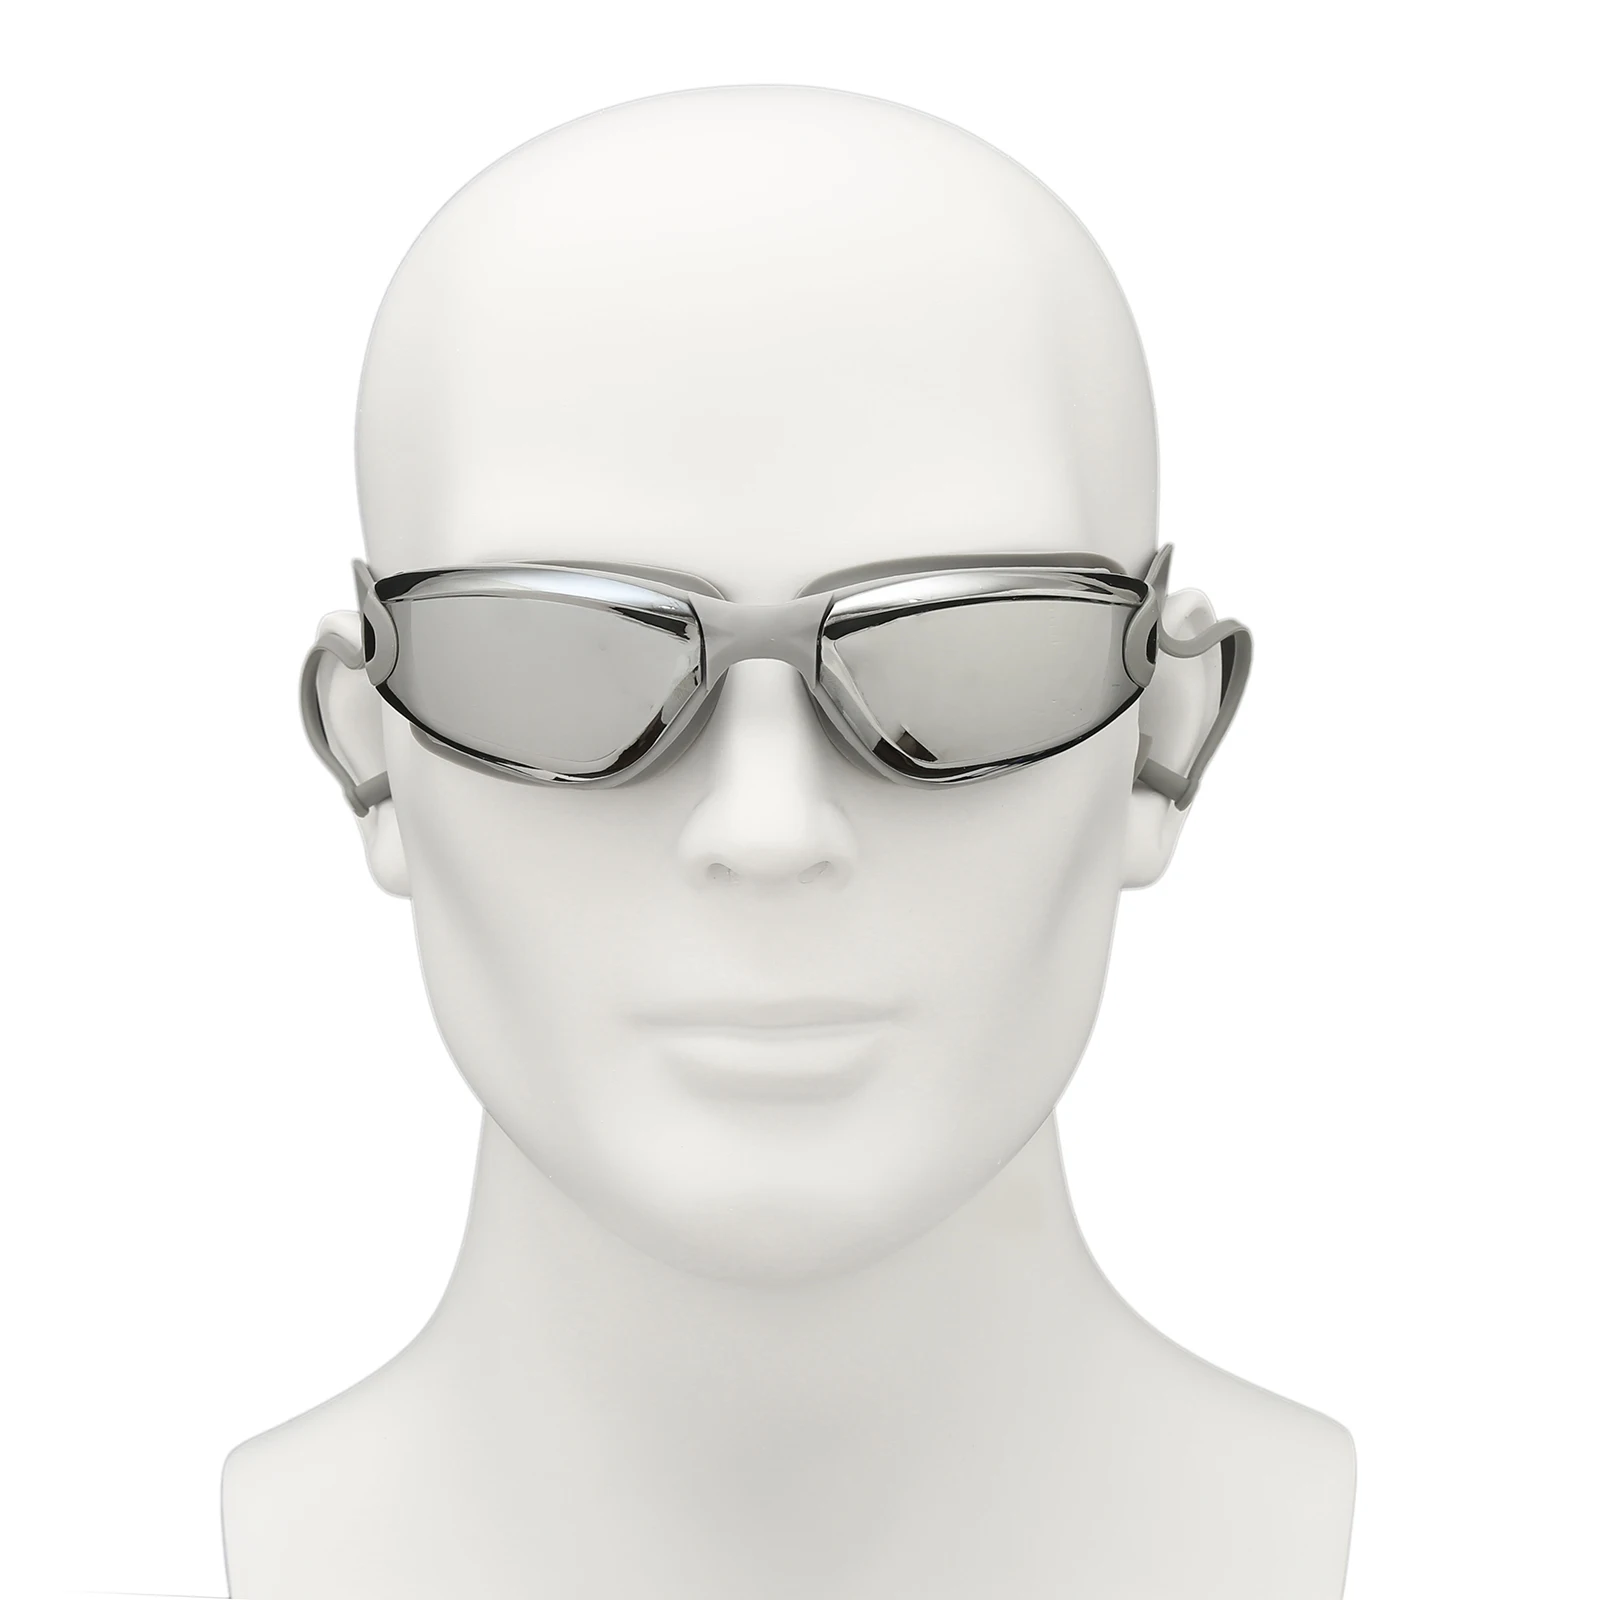 Unisex Swimming Goggles UV Protection Anti-fog Earplugs Swim Goggles w/ Adjustable Strap Wide Vision Eyewear Swimming Gear